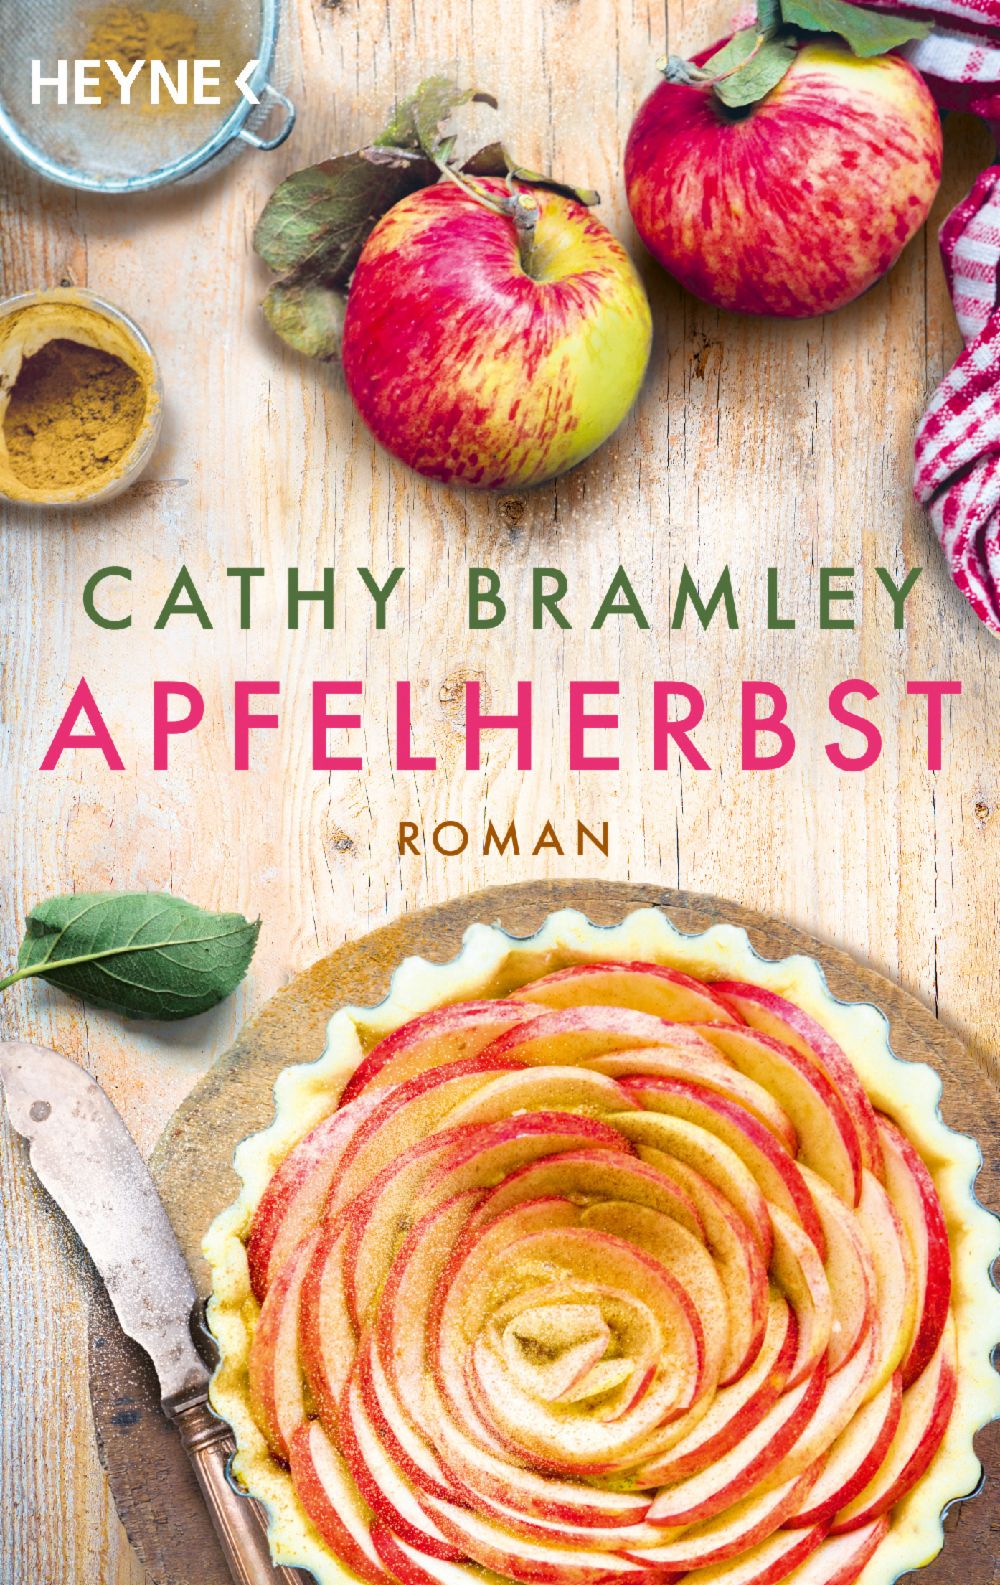 Roman: Apfelherbst - Cathy Bramley 